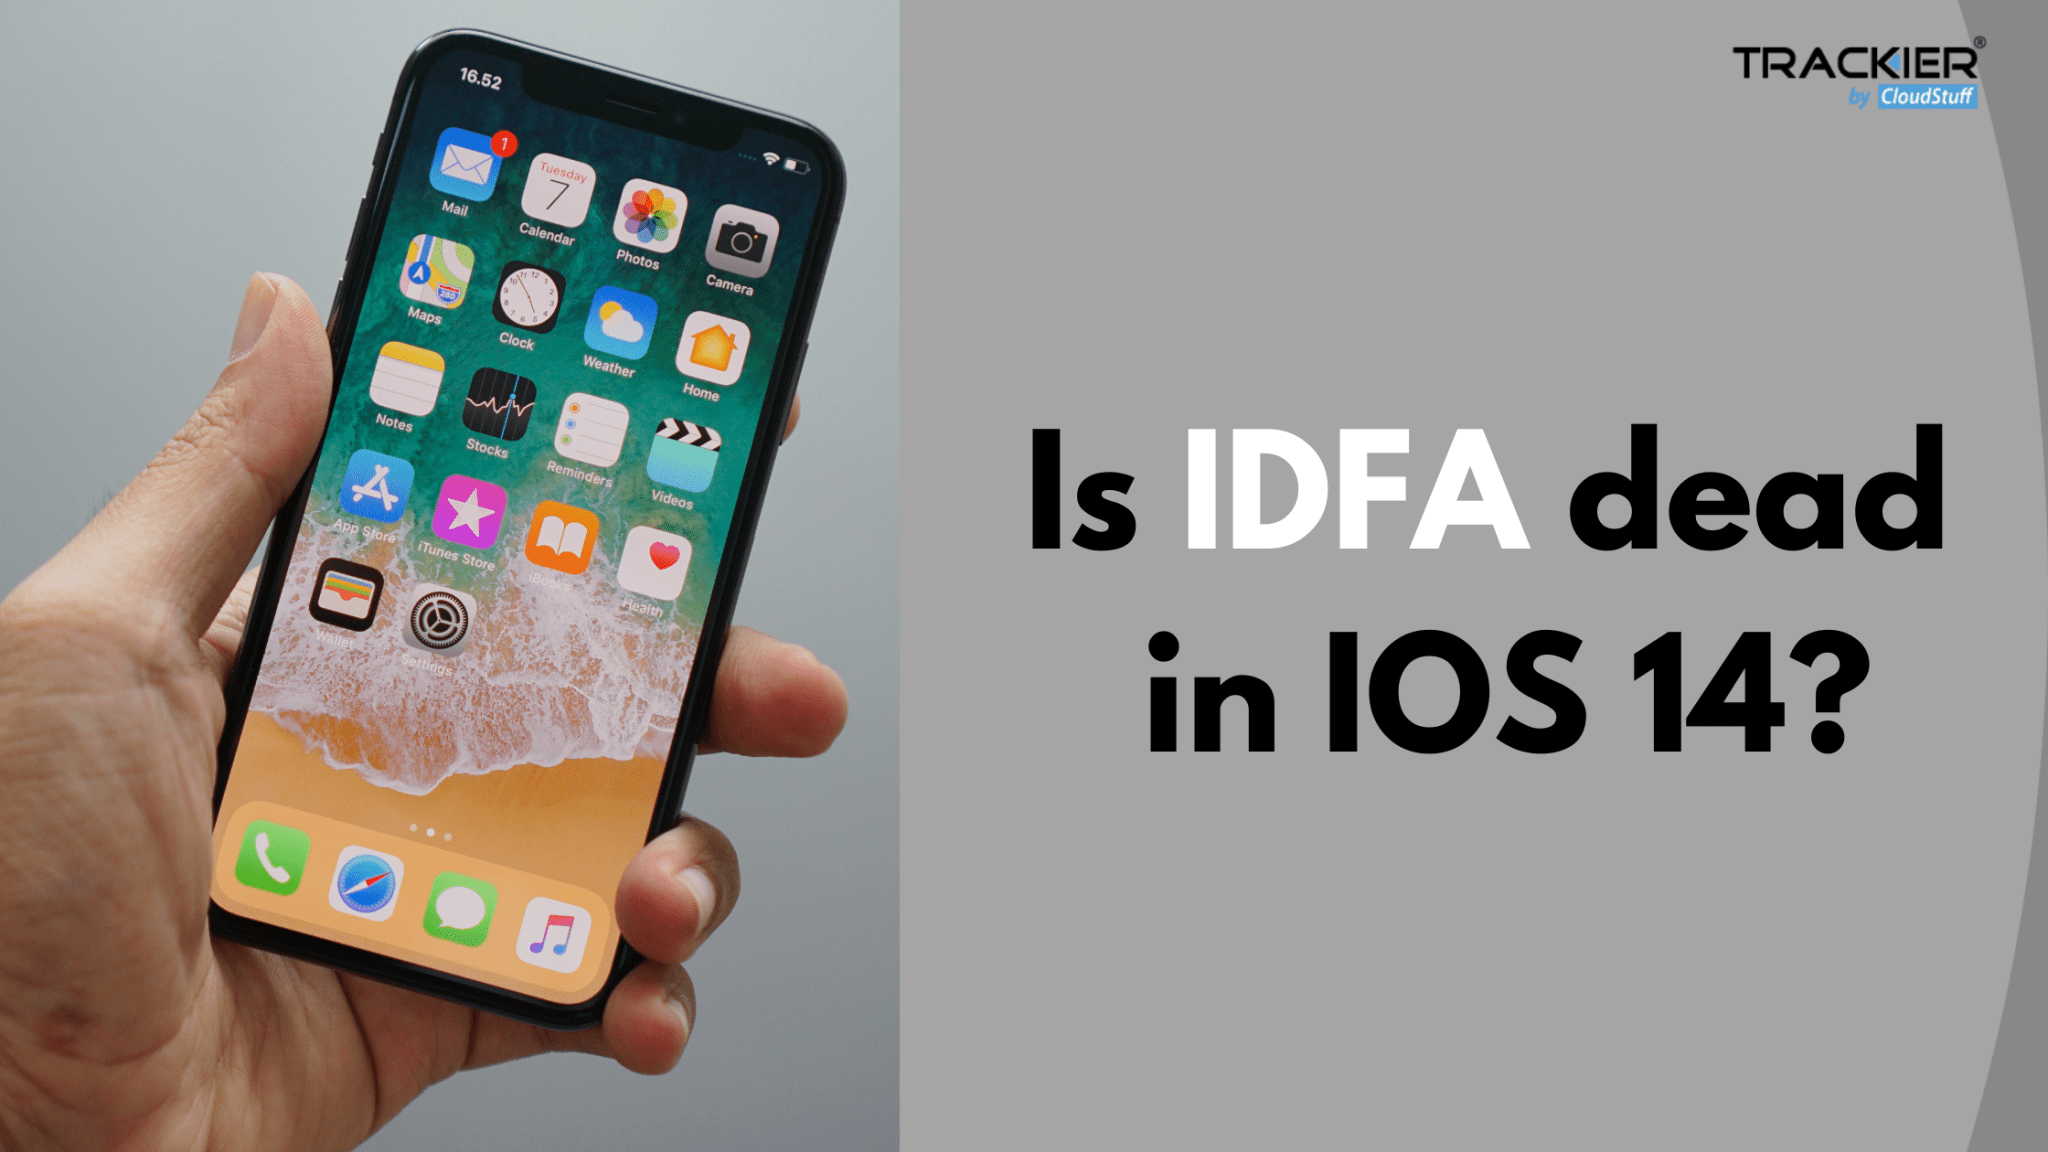 IDFA Dead In iOS 14